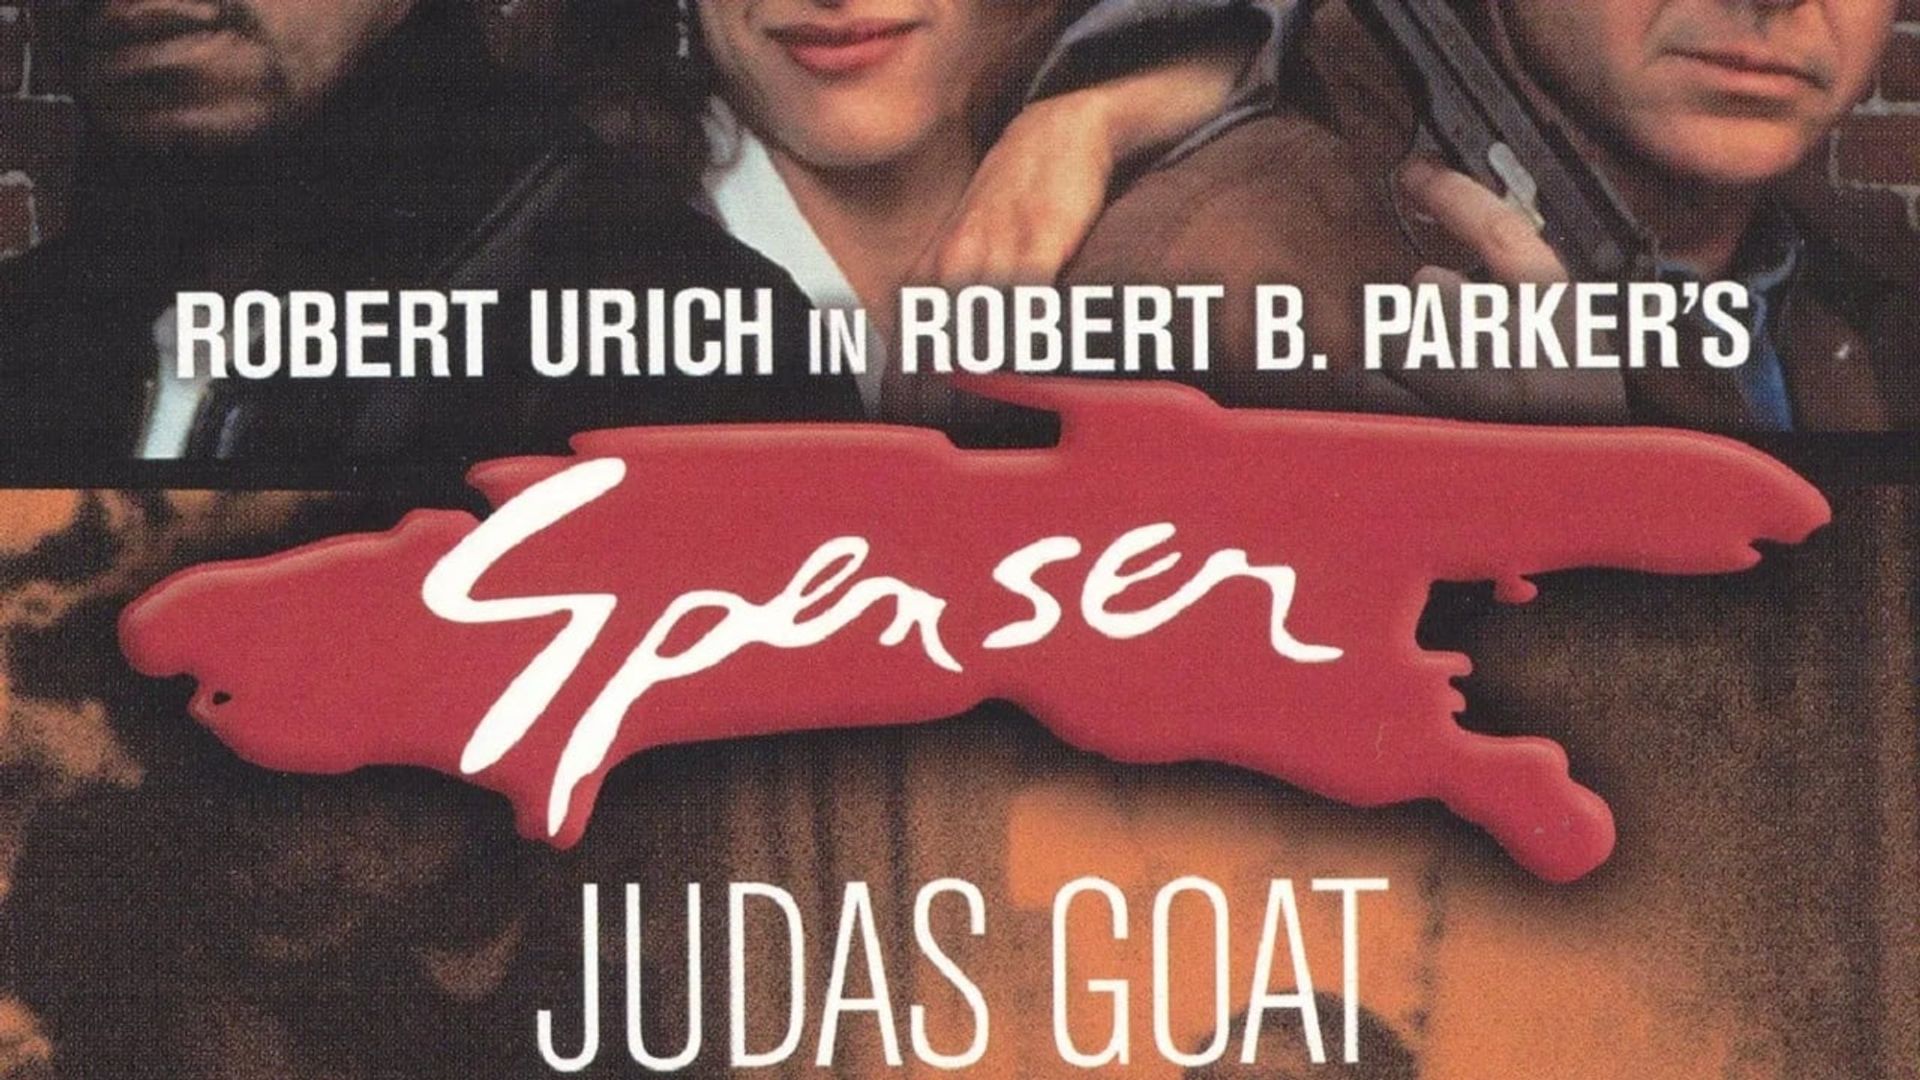 Spenser: The Judas Goat background